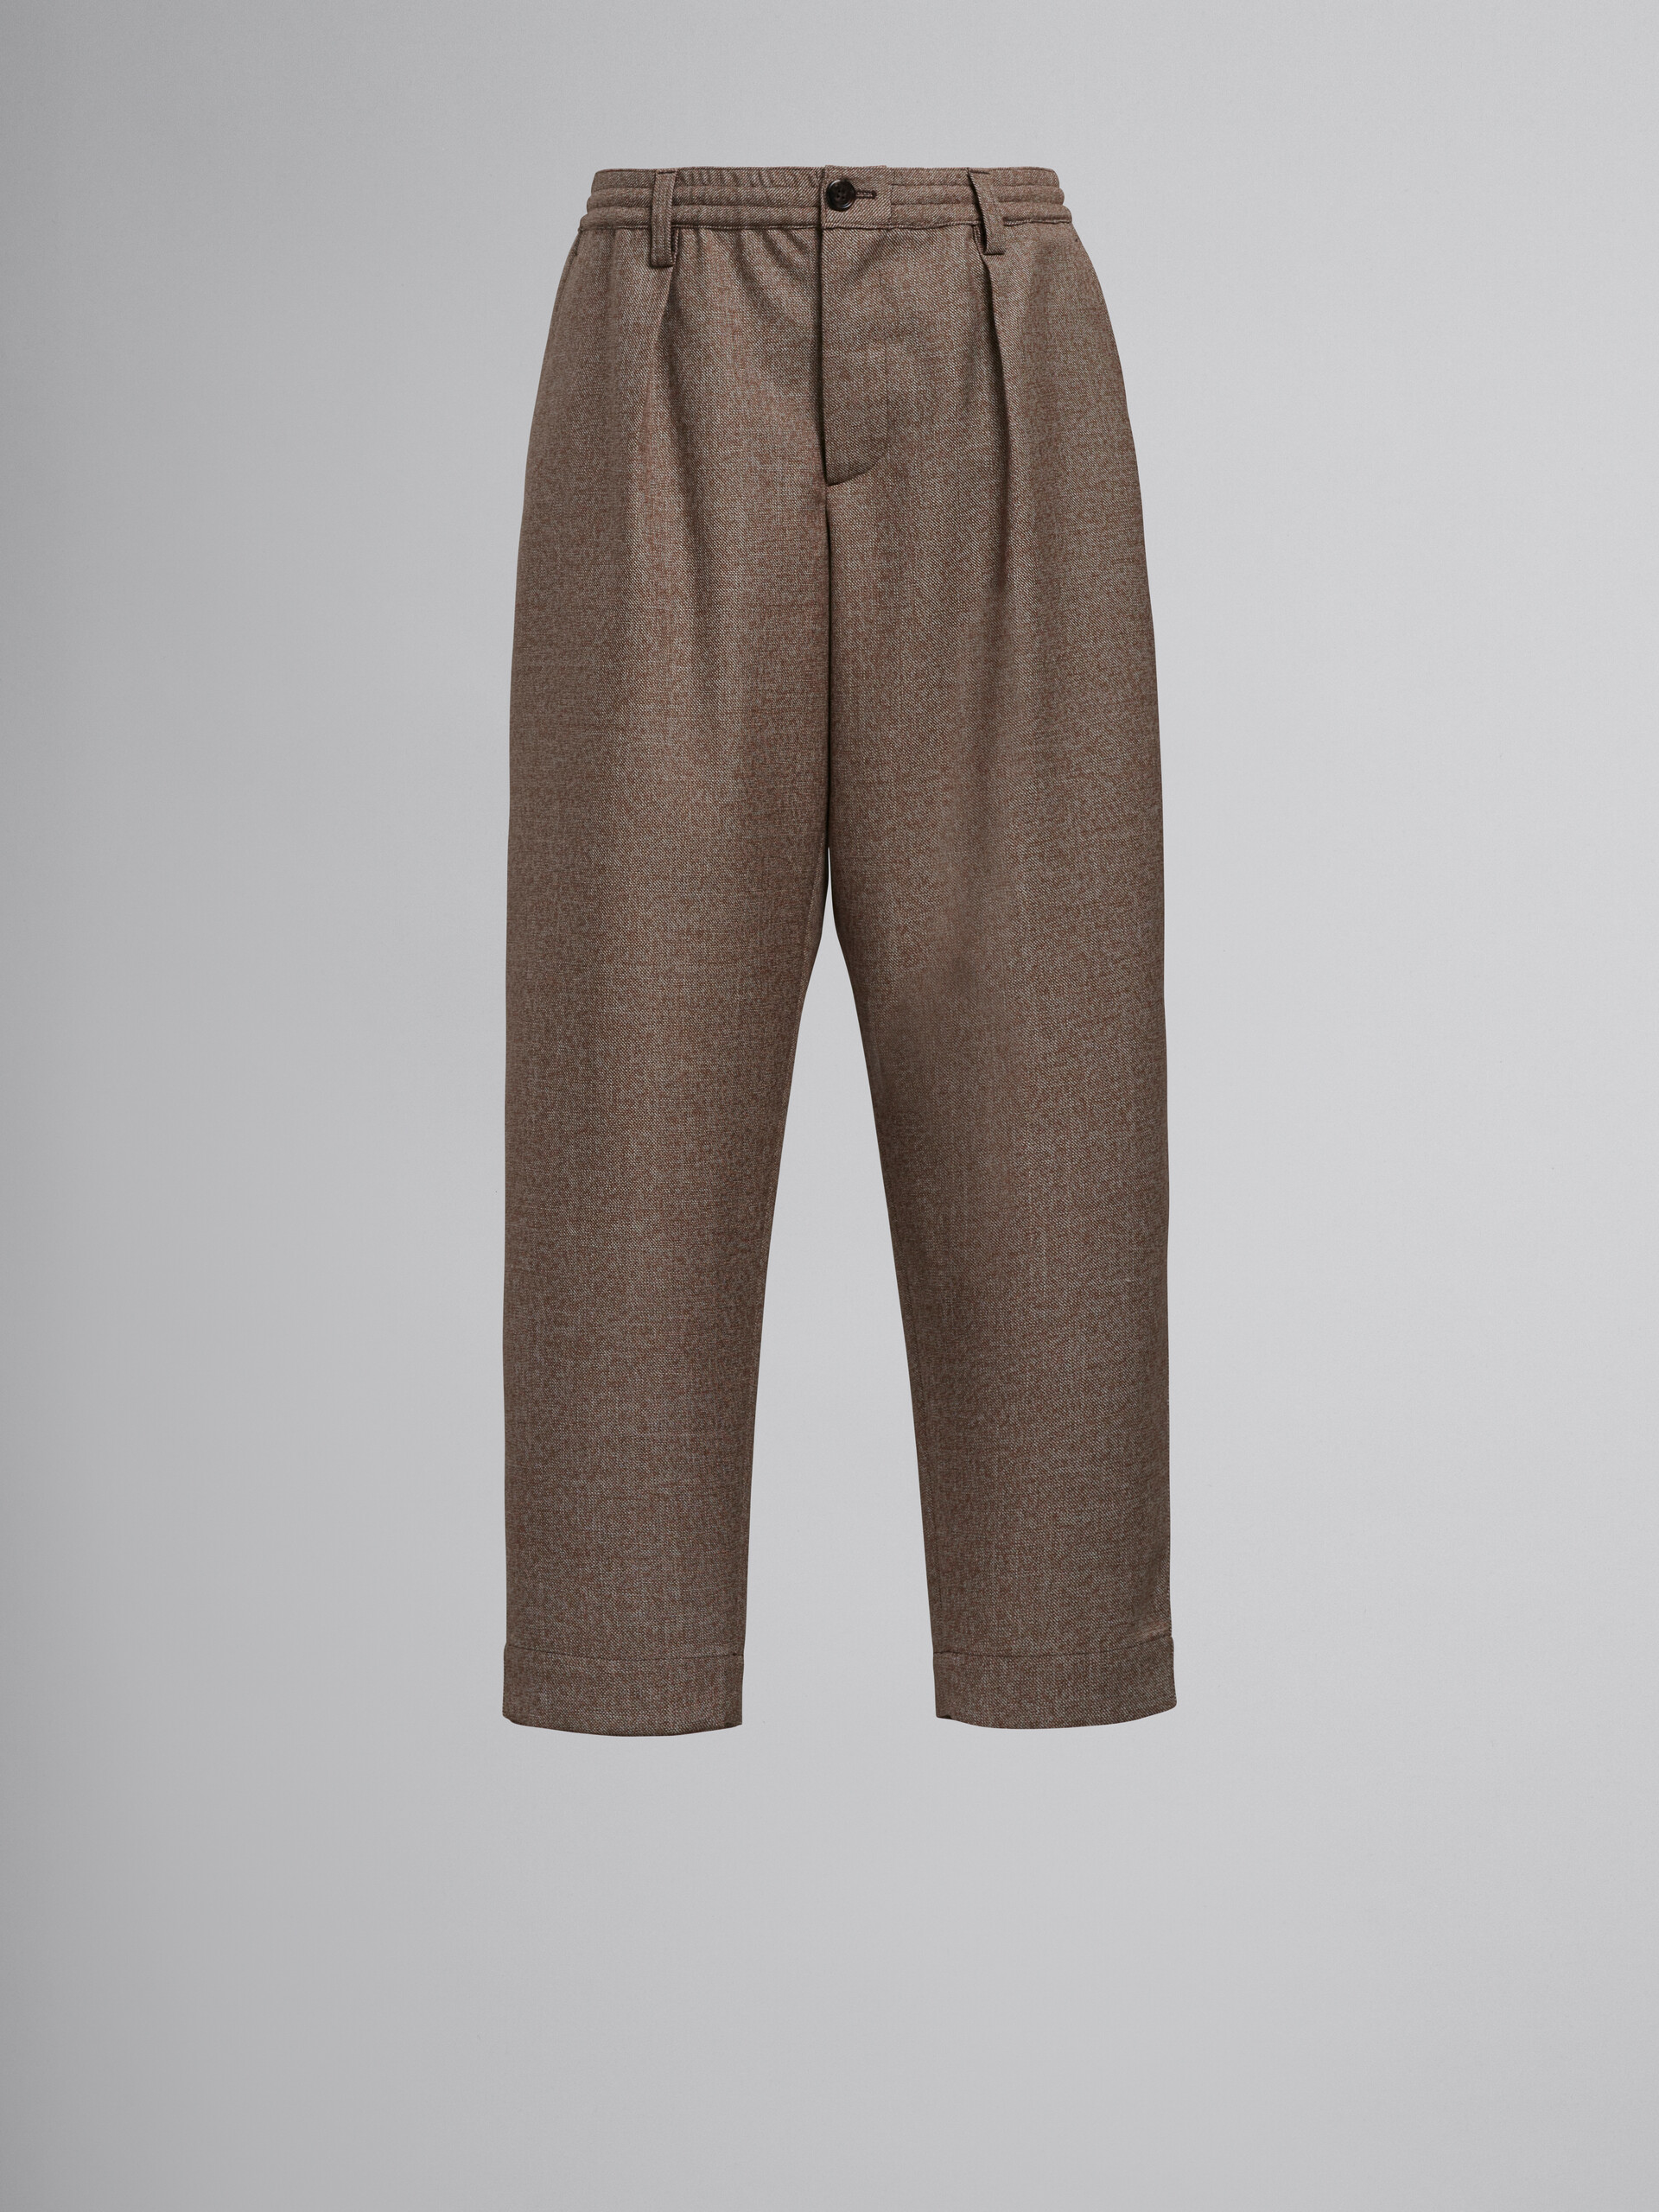 Light brown wool cropped pants - Pants - Image 1